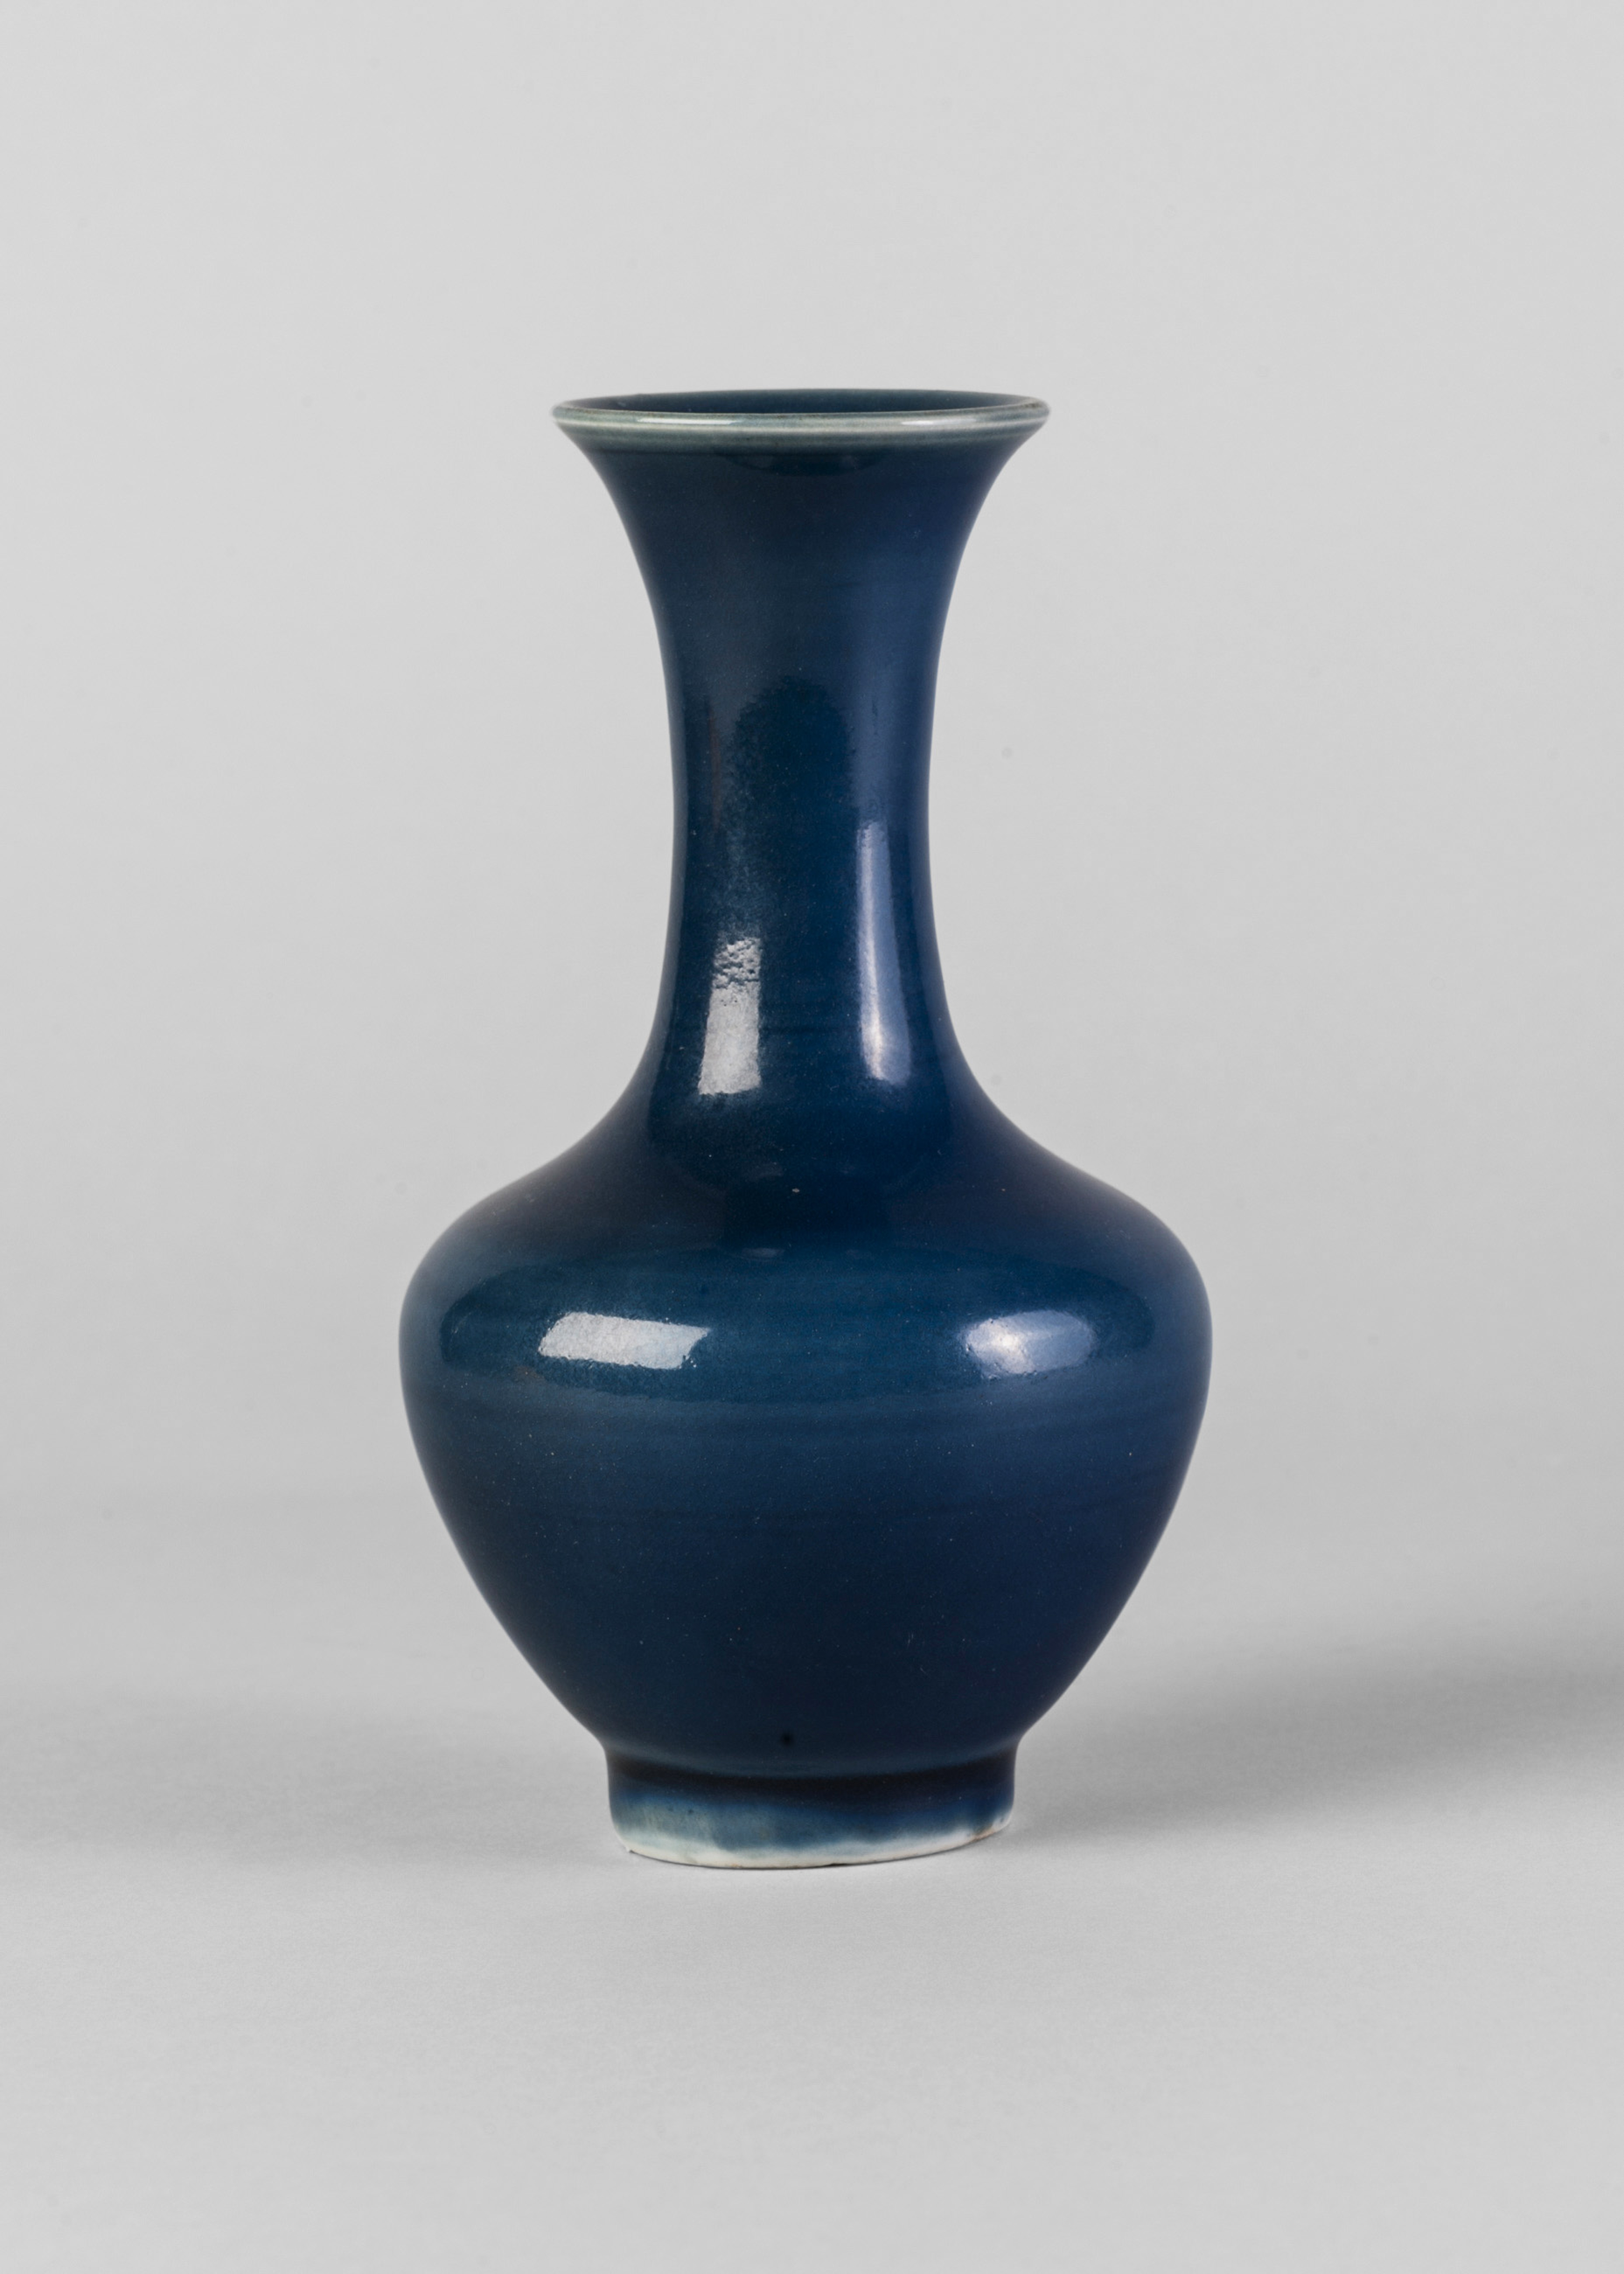 A Chinese porcelain monochrome blue bottle vase, 18th/19th century,